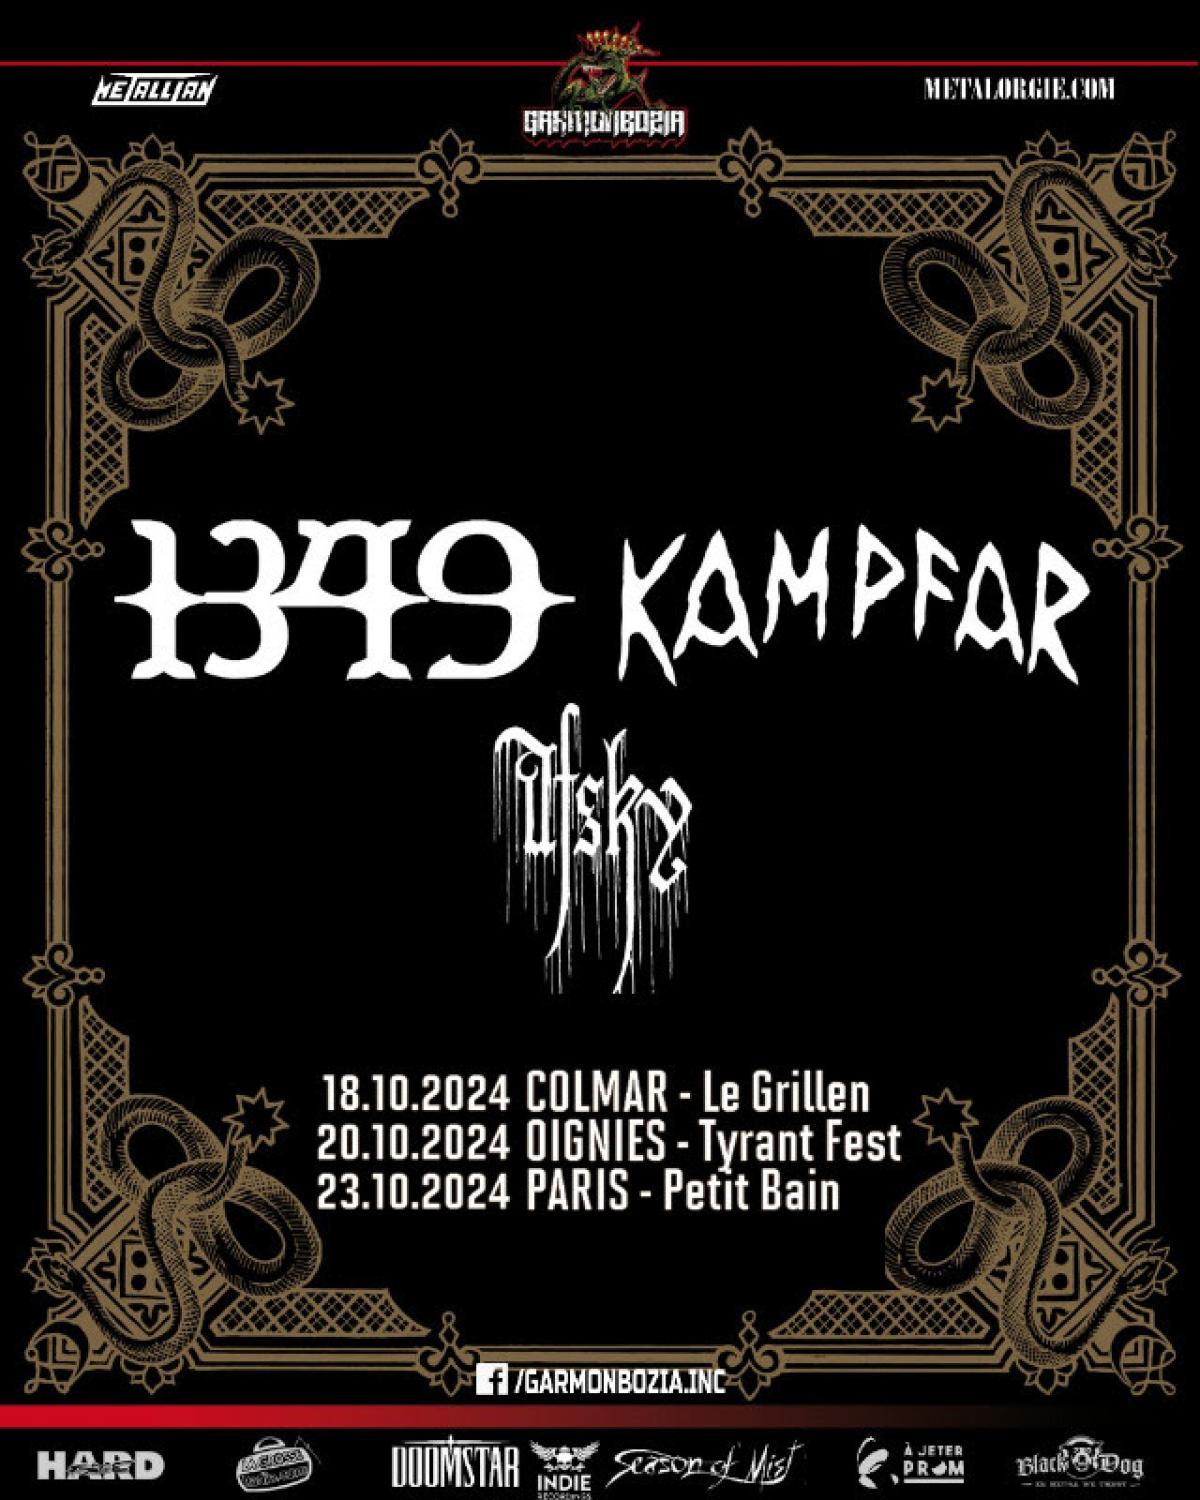 Billets 1349 - Kampfar - Afsky (Le Grillen - Colmar)